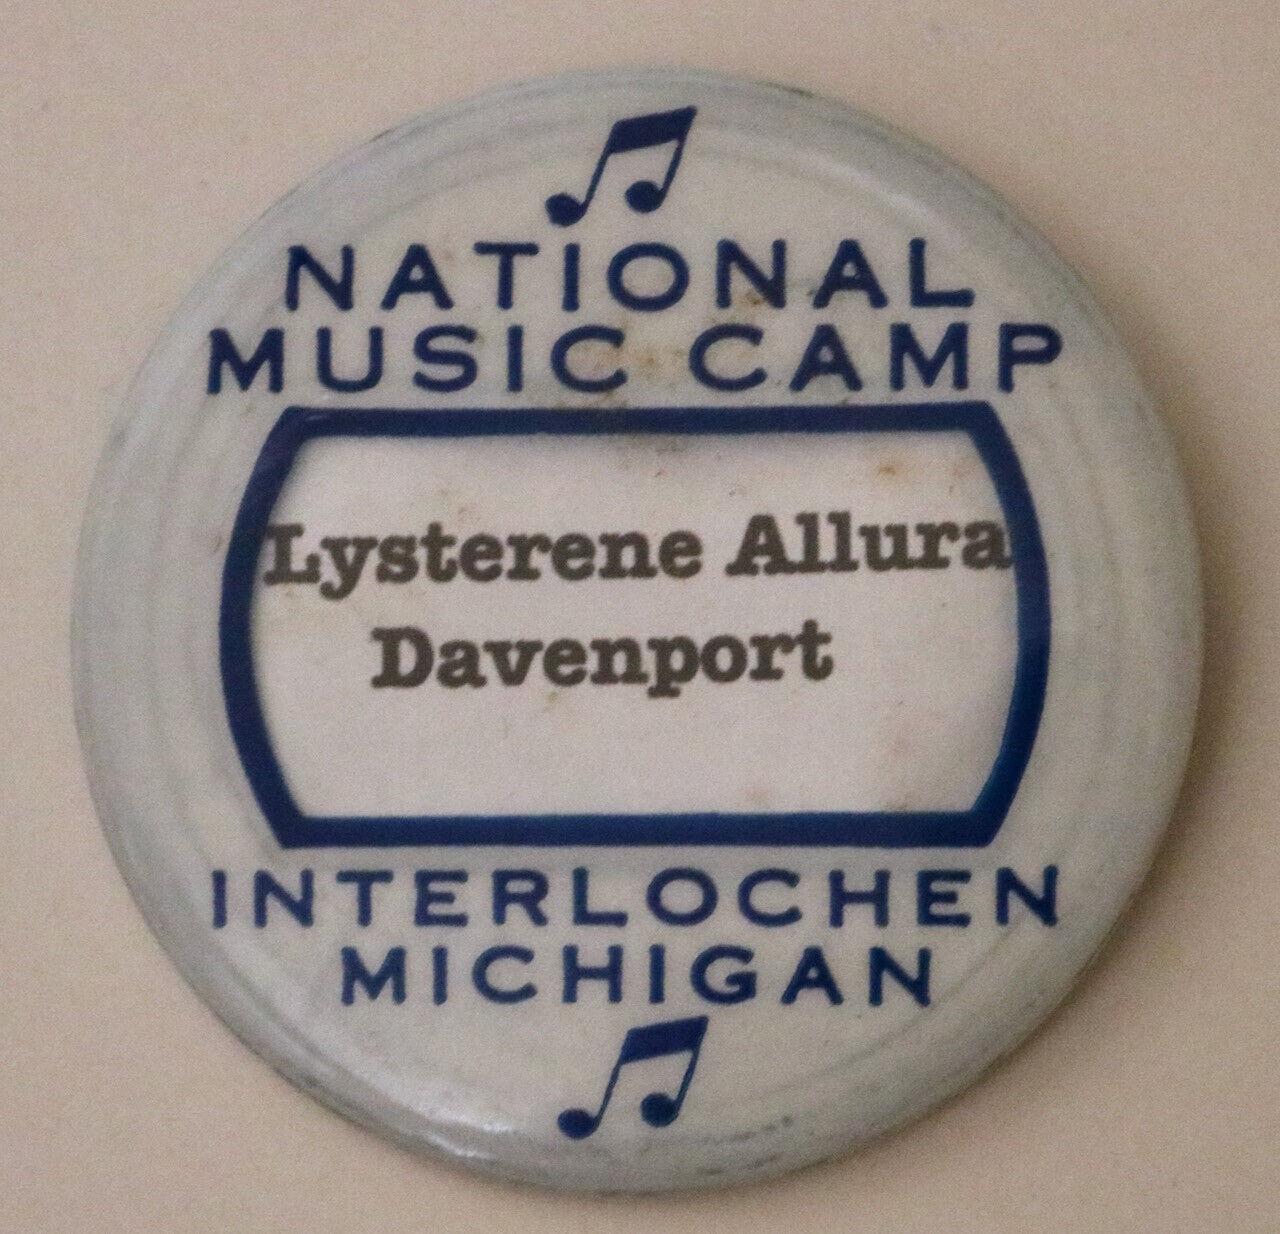 National Music Camp Interlochen Michigan vintage name badge pin